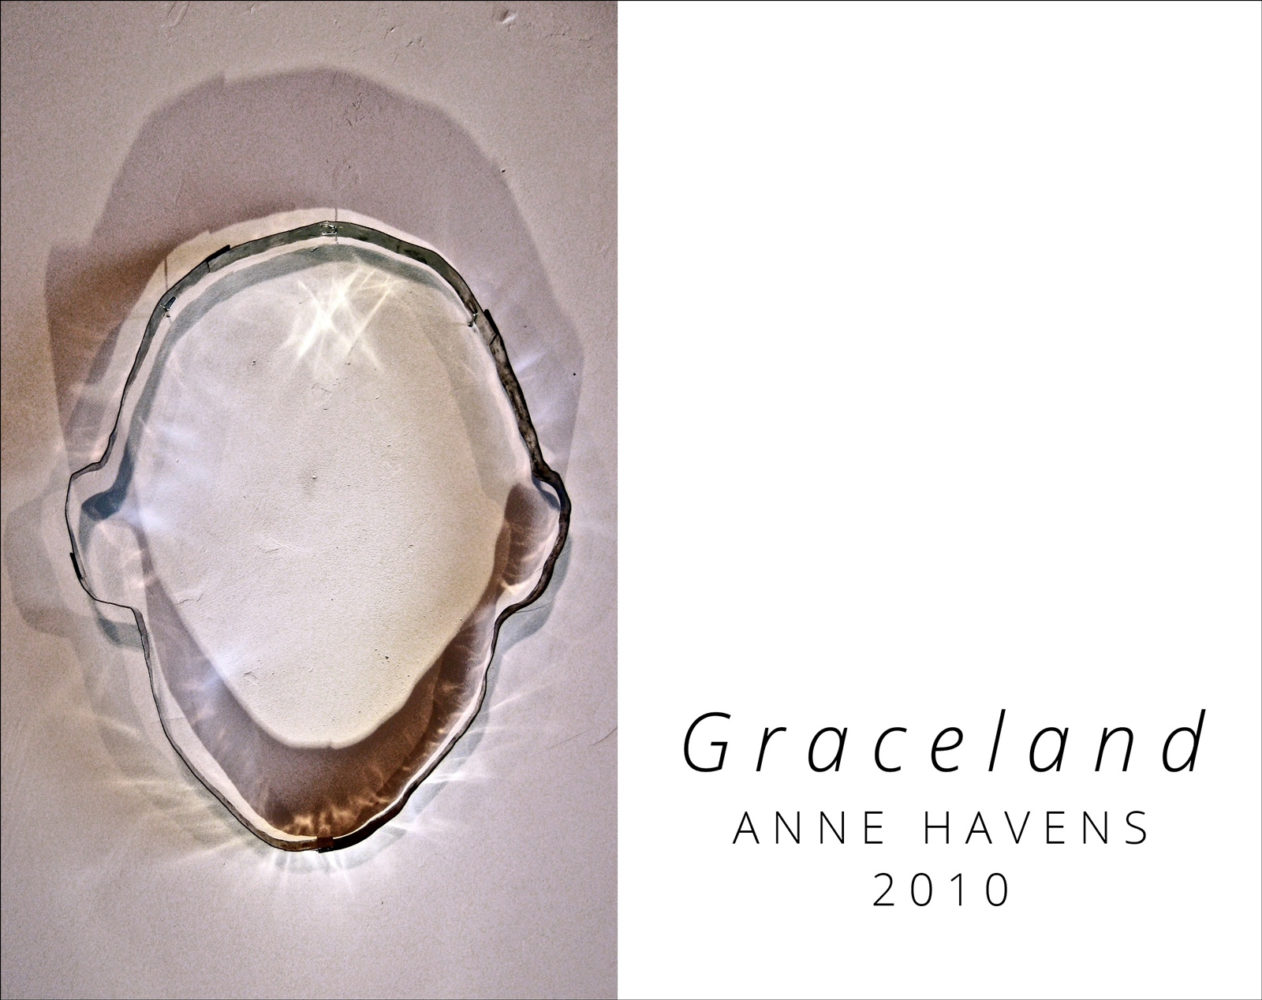 Cover of Anne Havens "Graceland" 2010